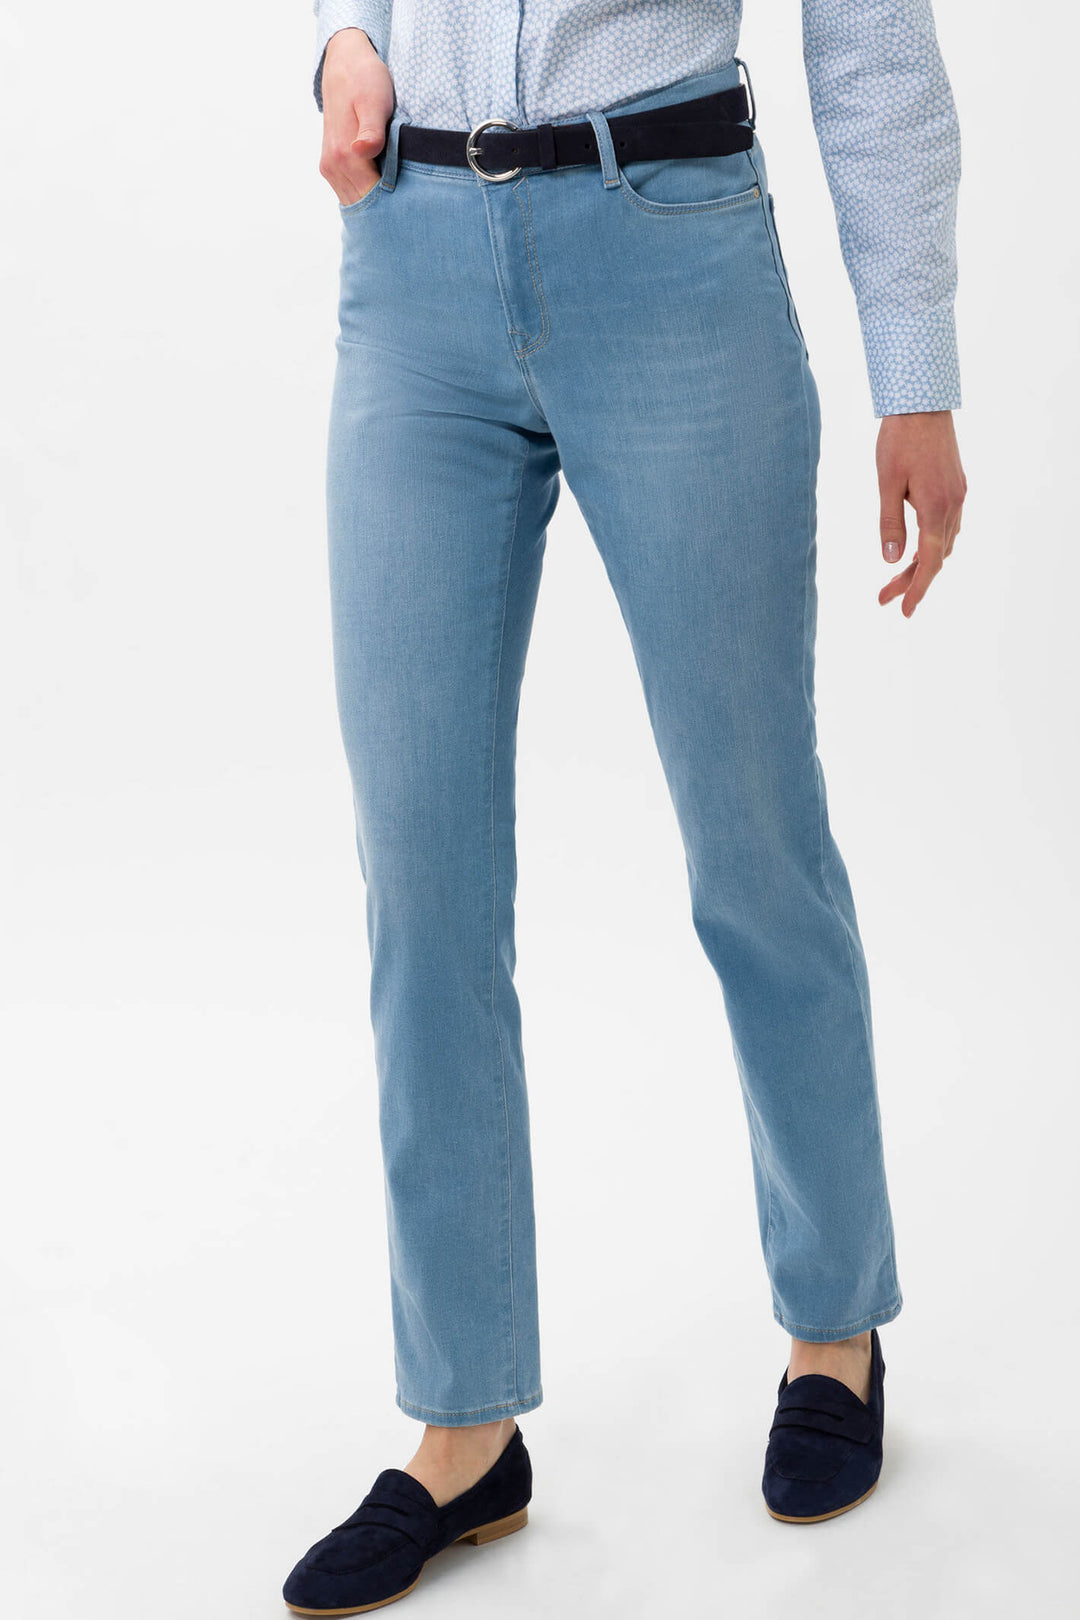 Brax 74-4007-17 Mary Blue Slim Fit Jeans - Olivia Grace Fashion